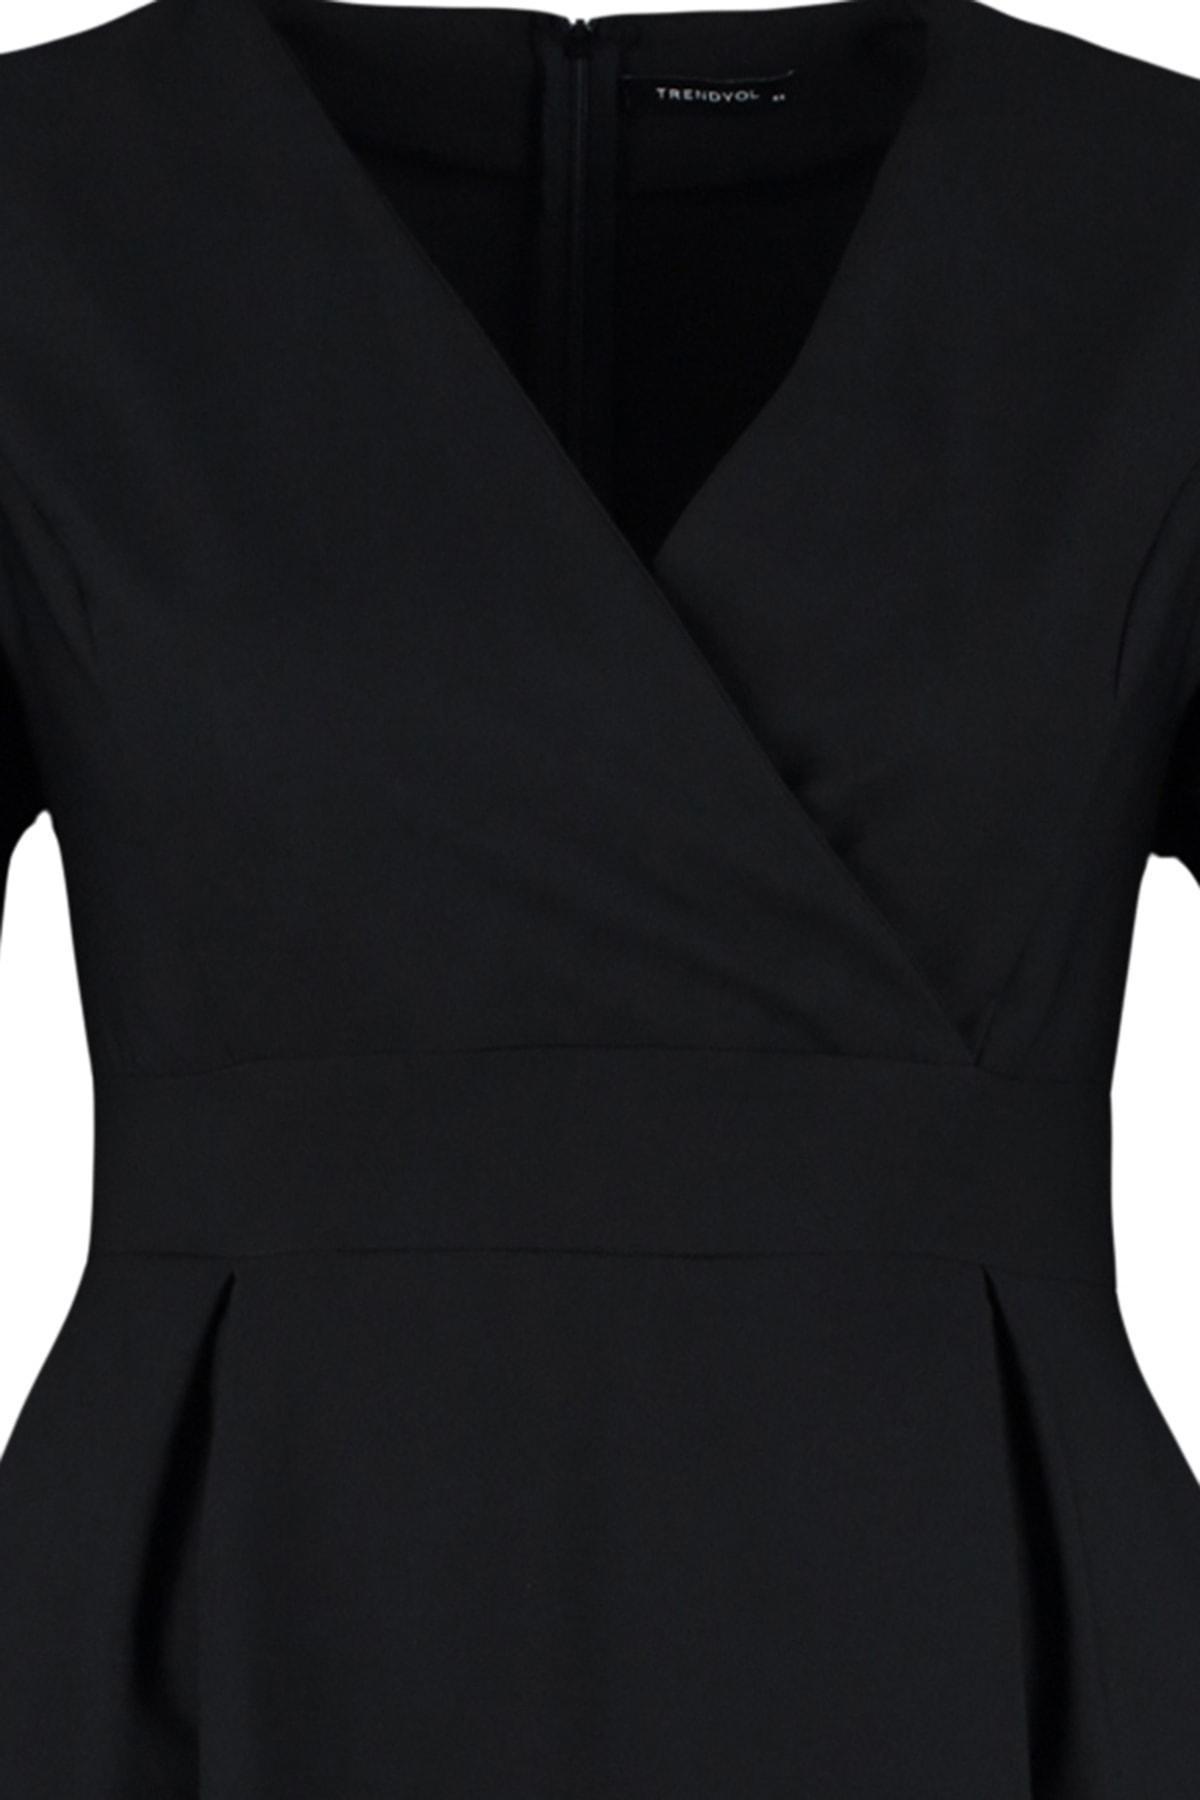 Trendyol - Black Basic Plus Size Dress